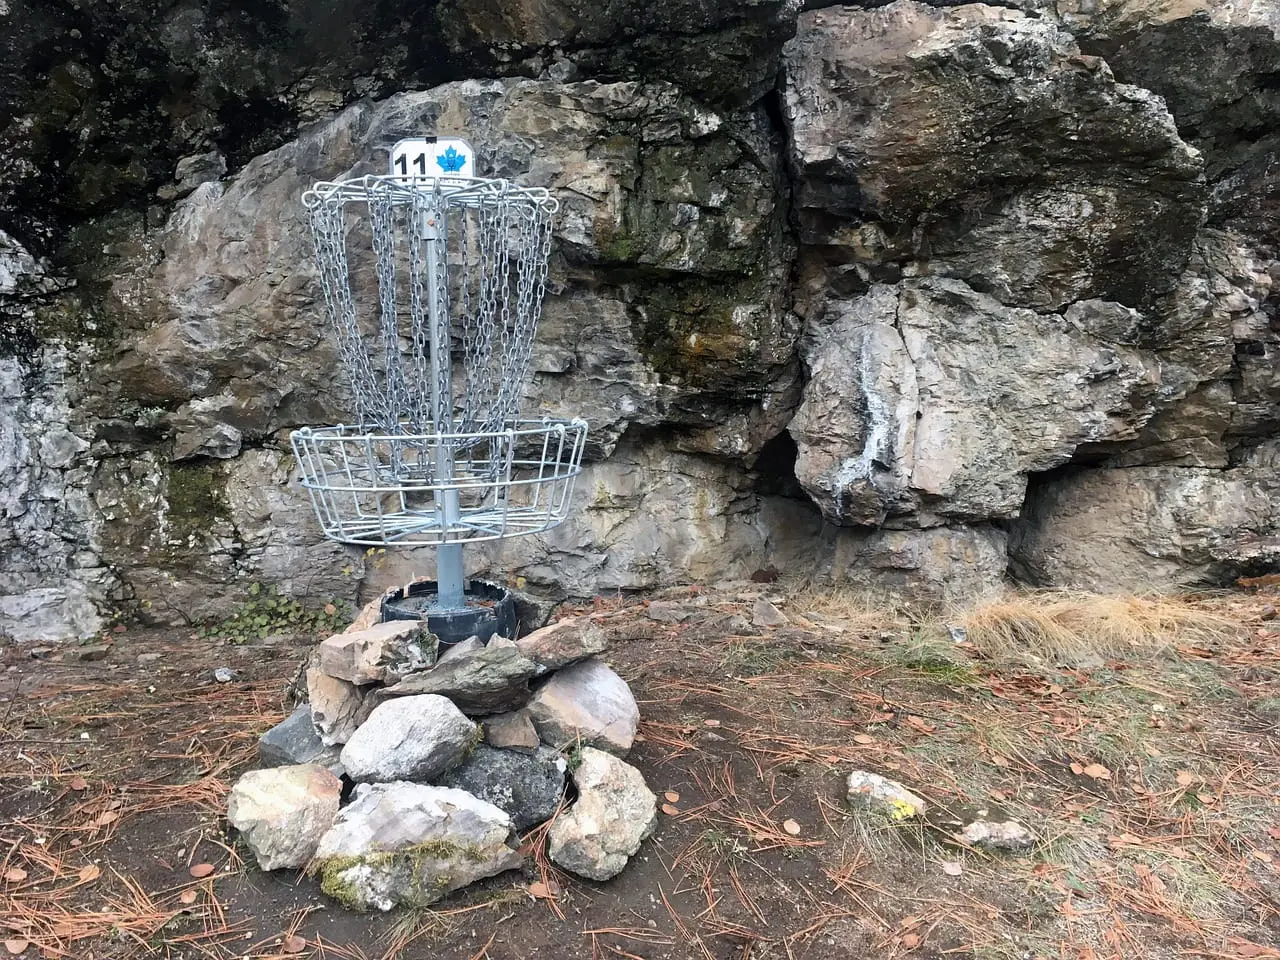 Disc golf basket elevated by rocks